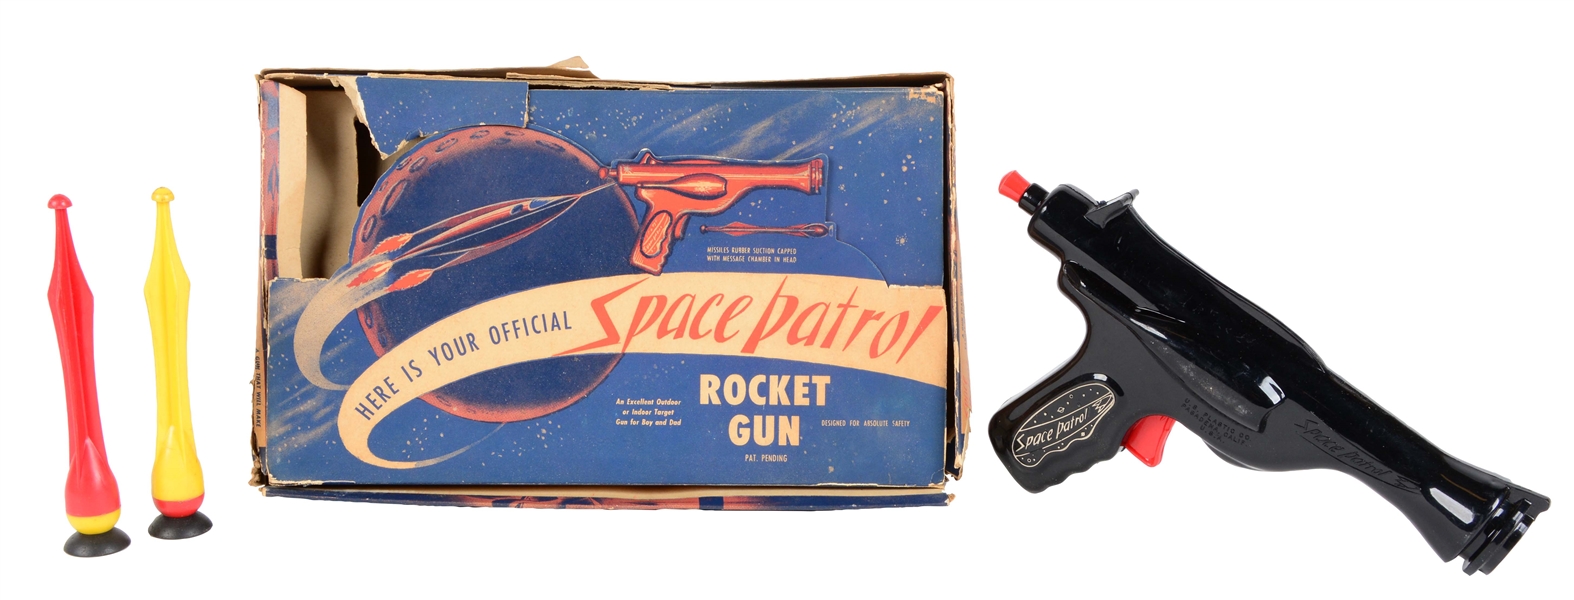 OFFICIAL SPACE PATROL ROCKET GUN IN ORIGINAL BOX. 